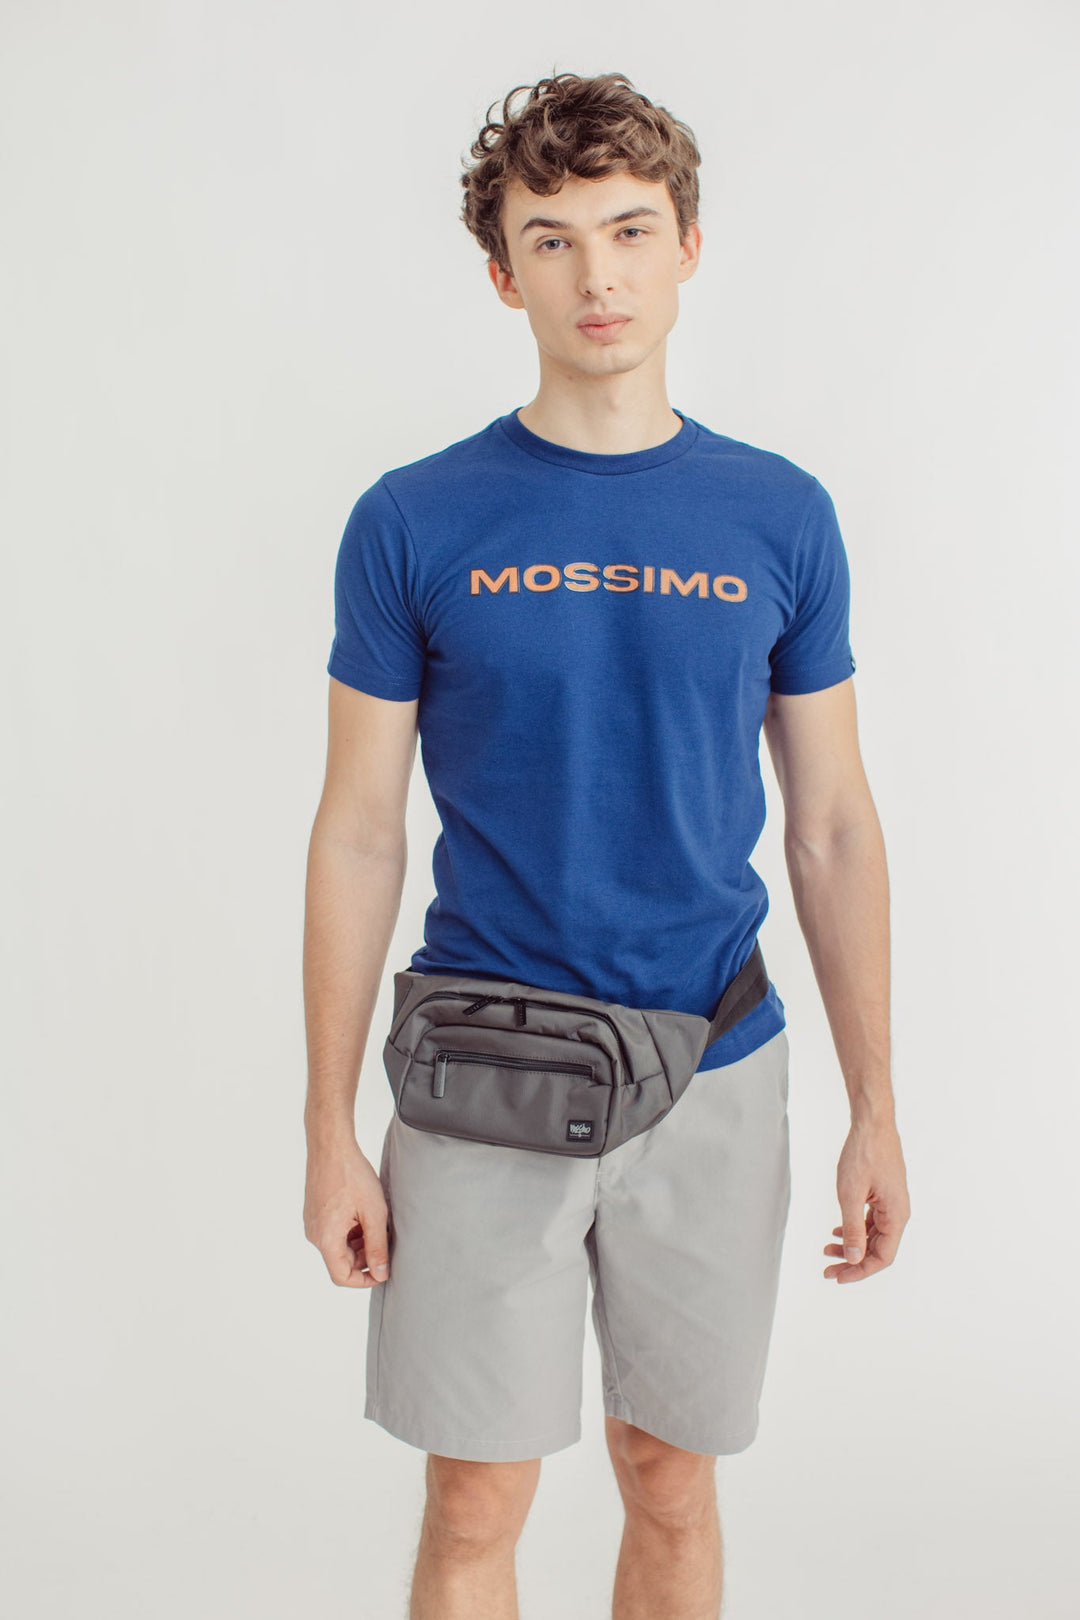 Vincent Mossimo Men's Belt Bag - Mossimo PH